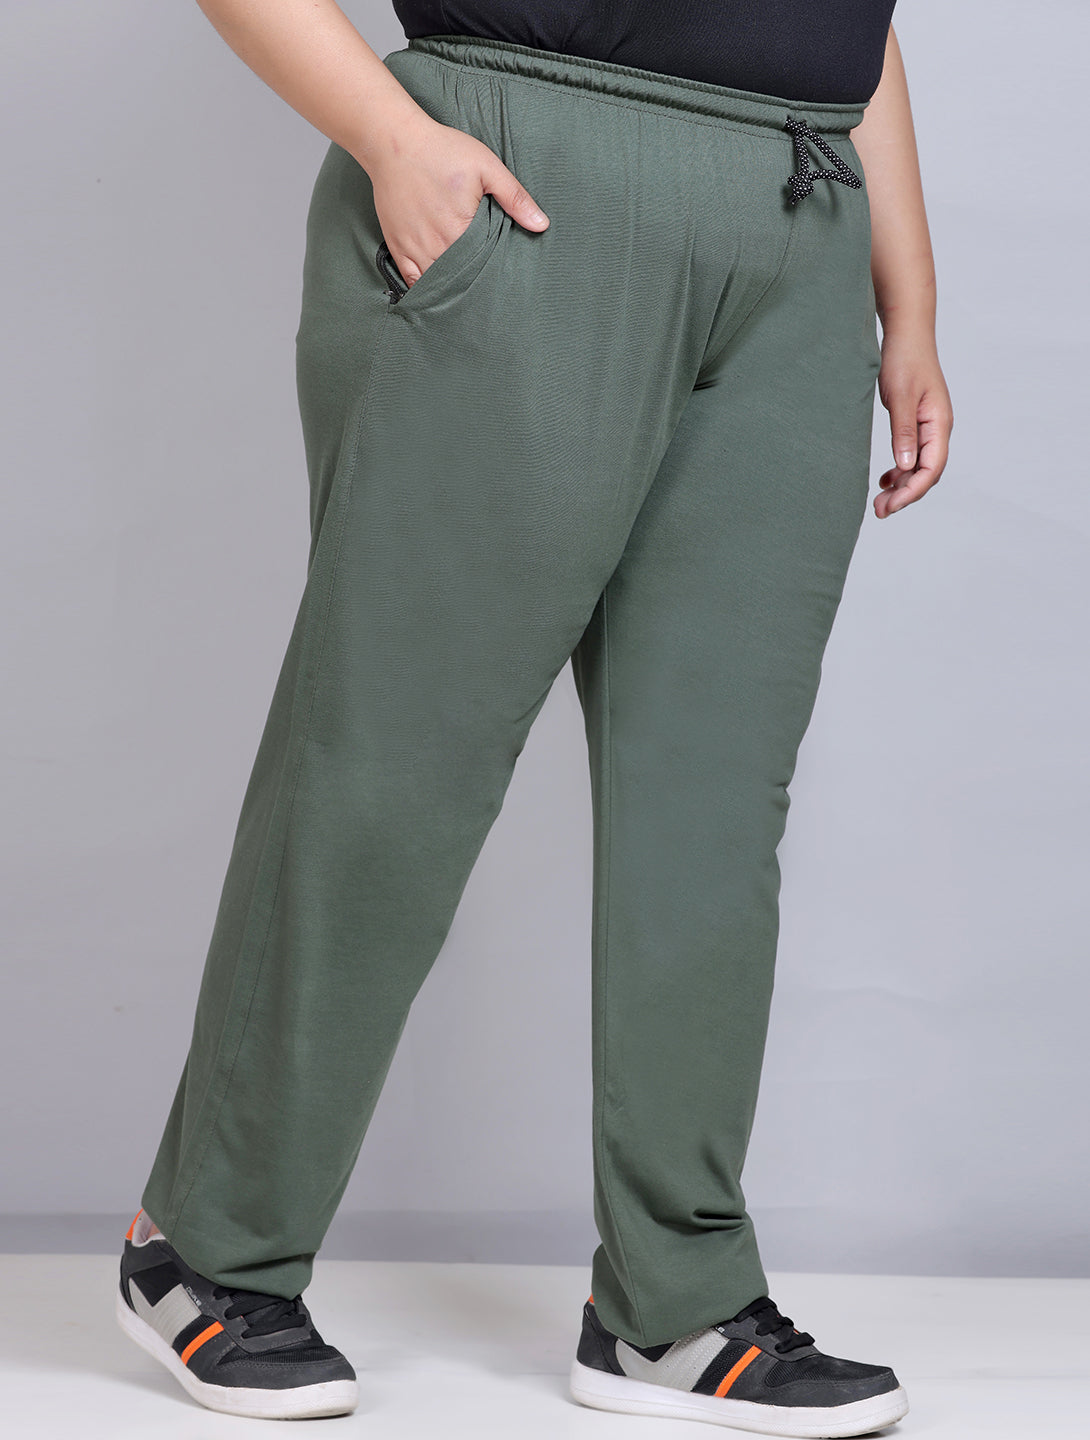 Women's Green Solid Nylon Activewear Jogger